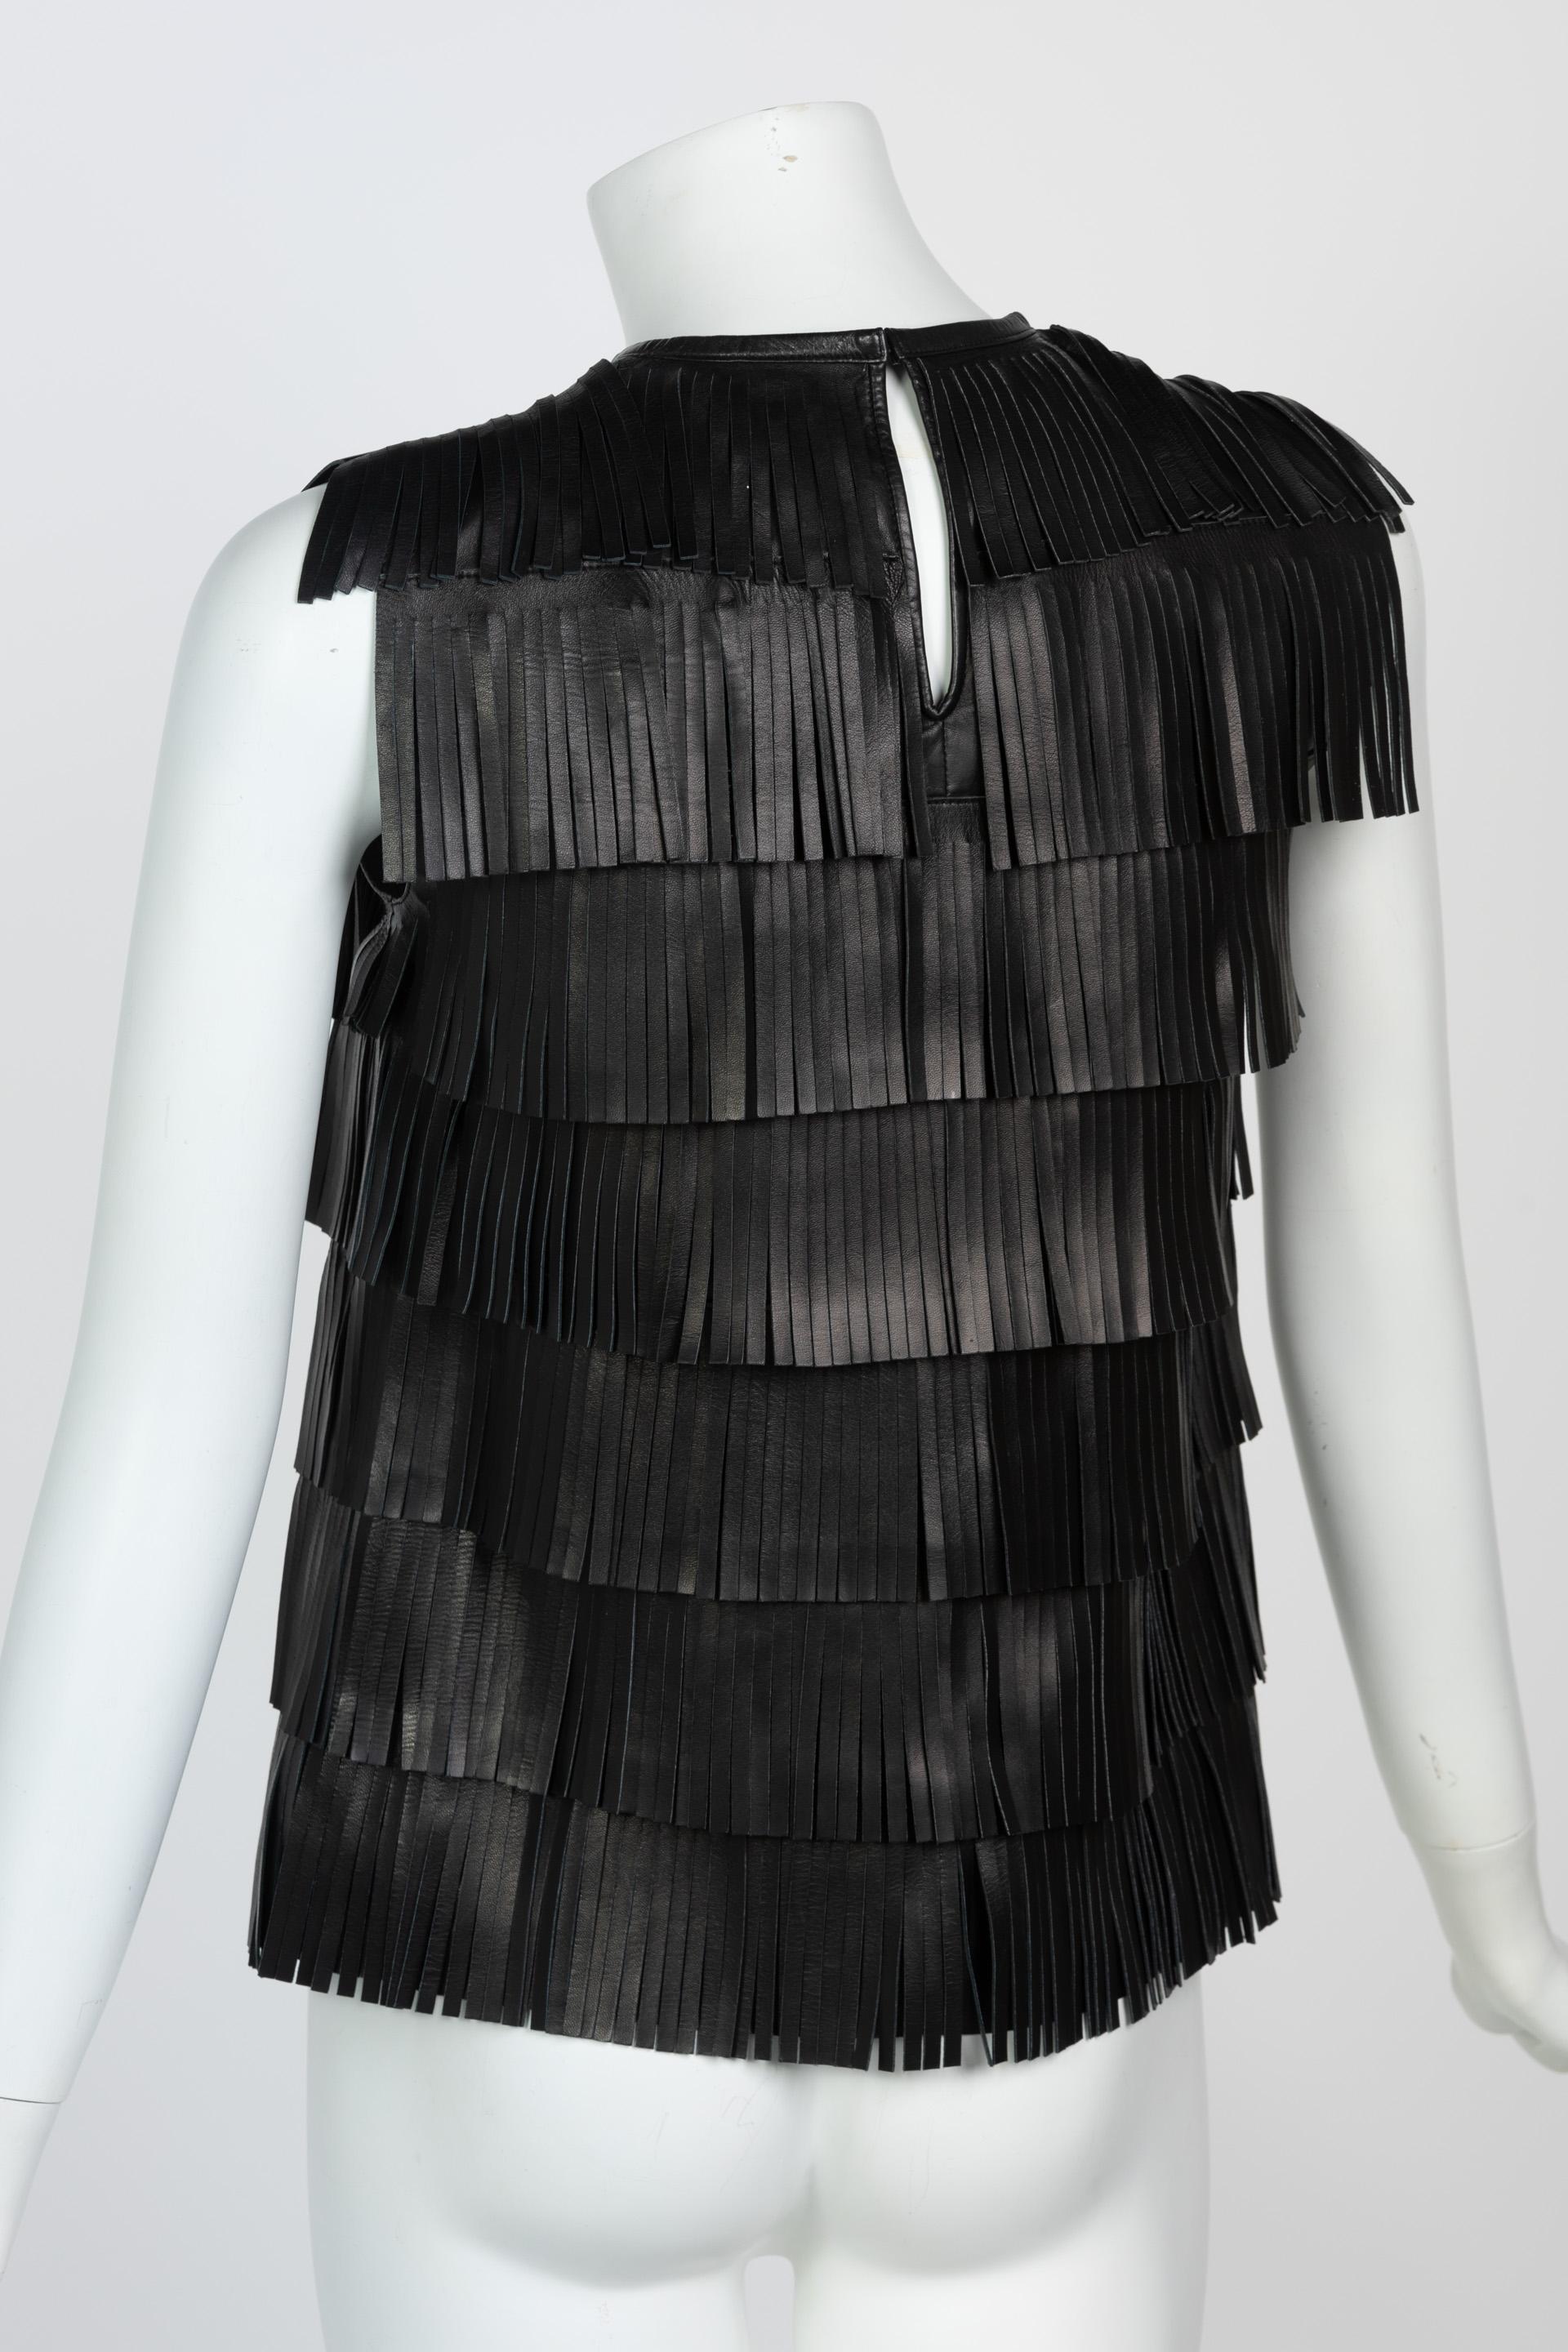 black leather fringe dress